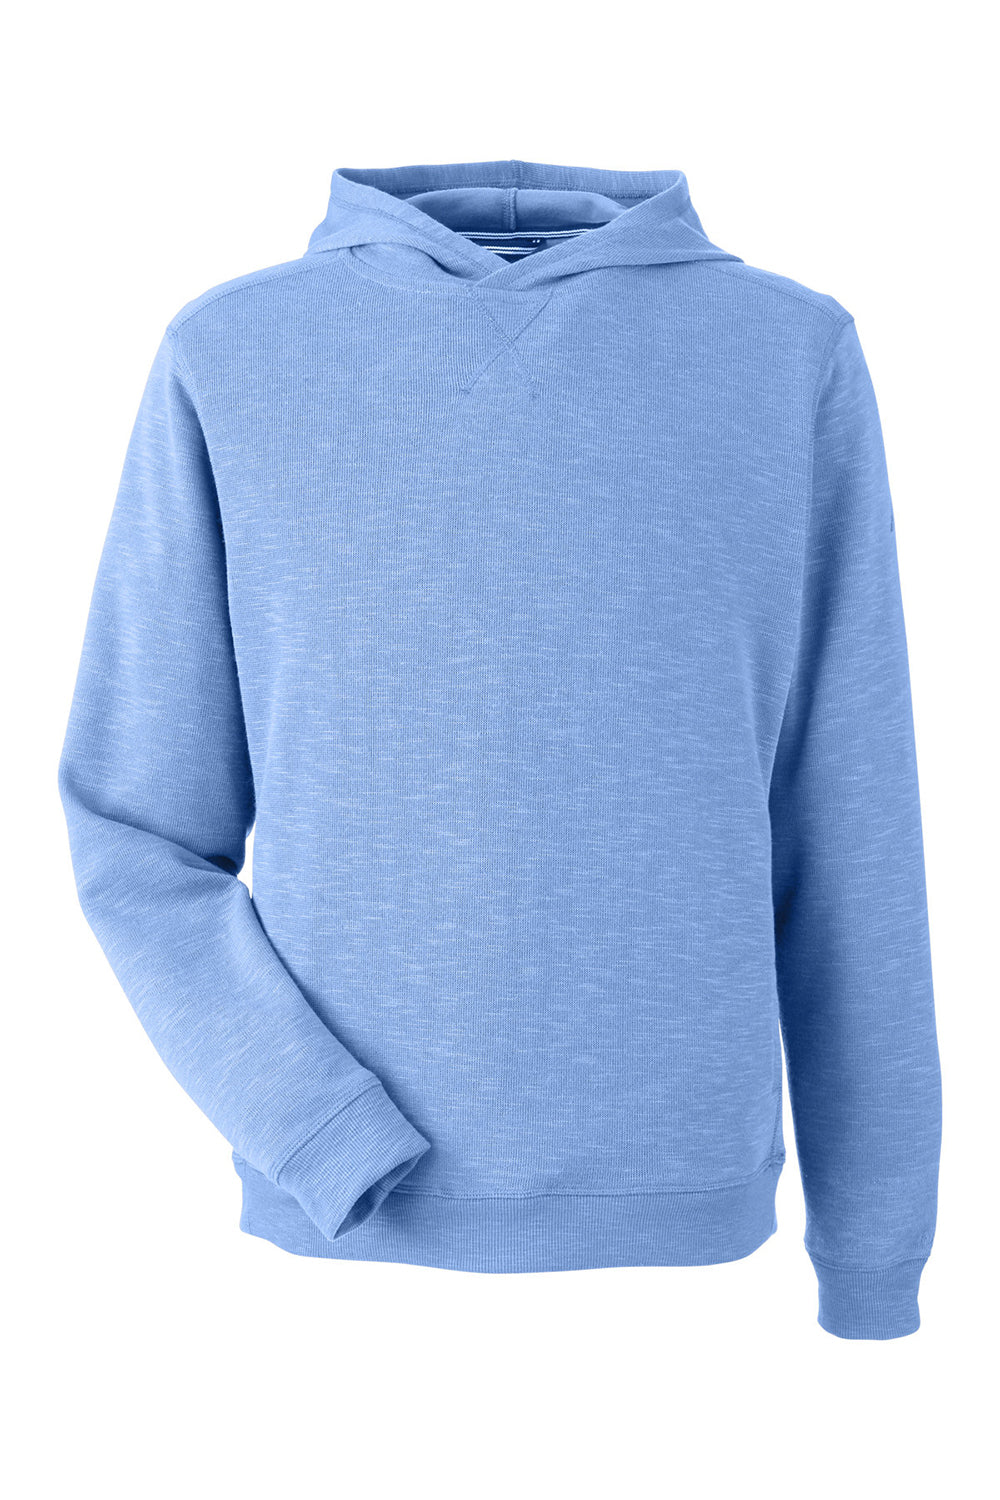 Nautica N17990 Mens Sun Surfer Supreme Hooded Sweatshirt Hoodie Vintage Mavi Blue Flat Front